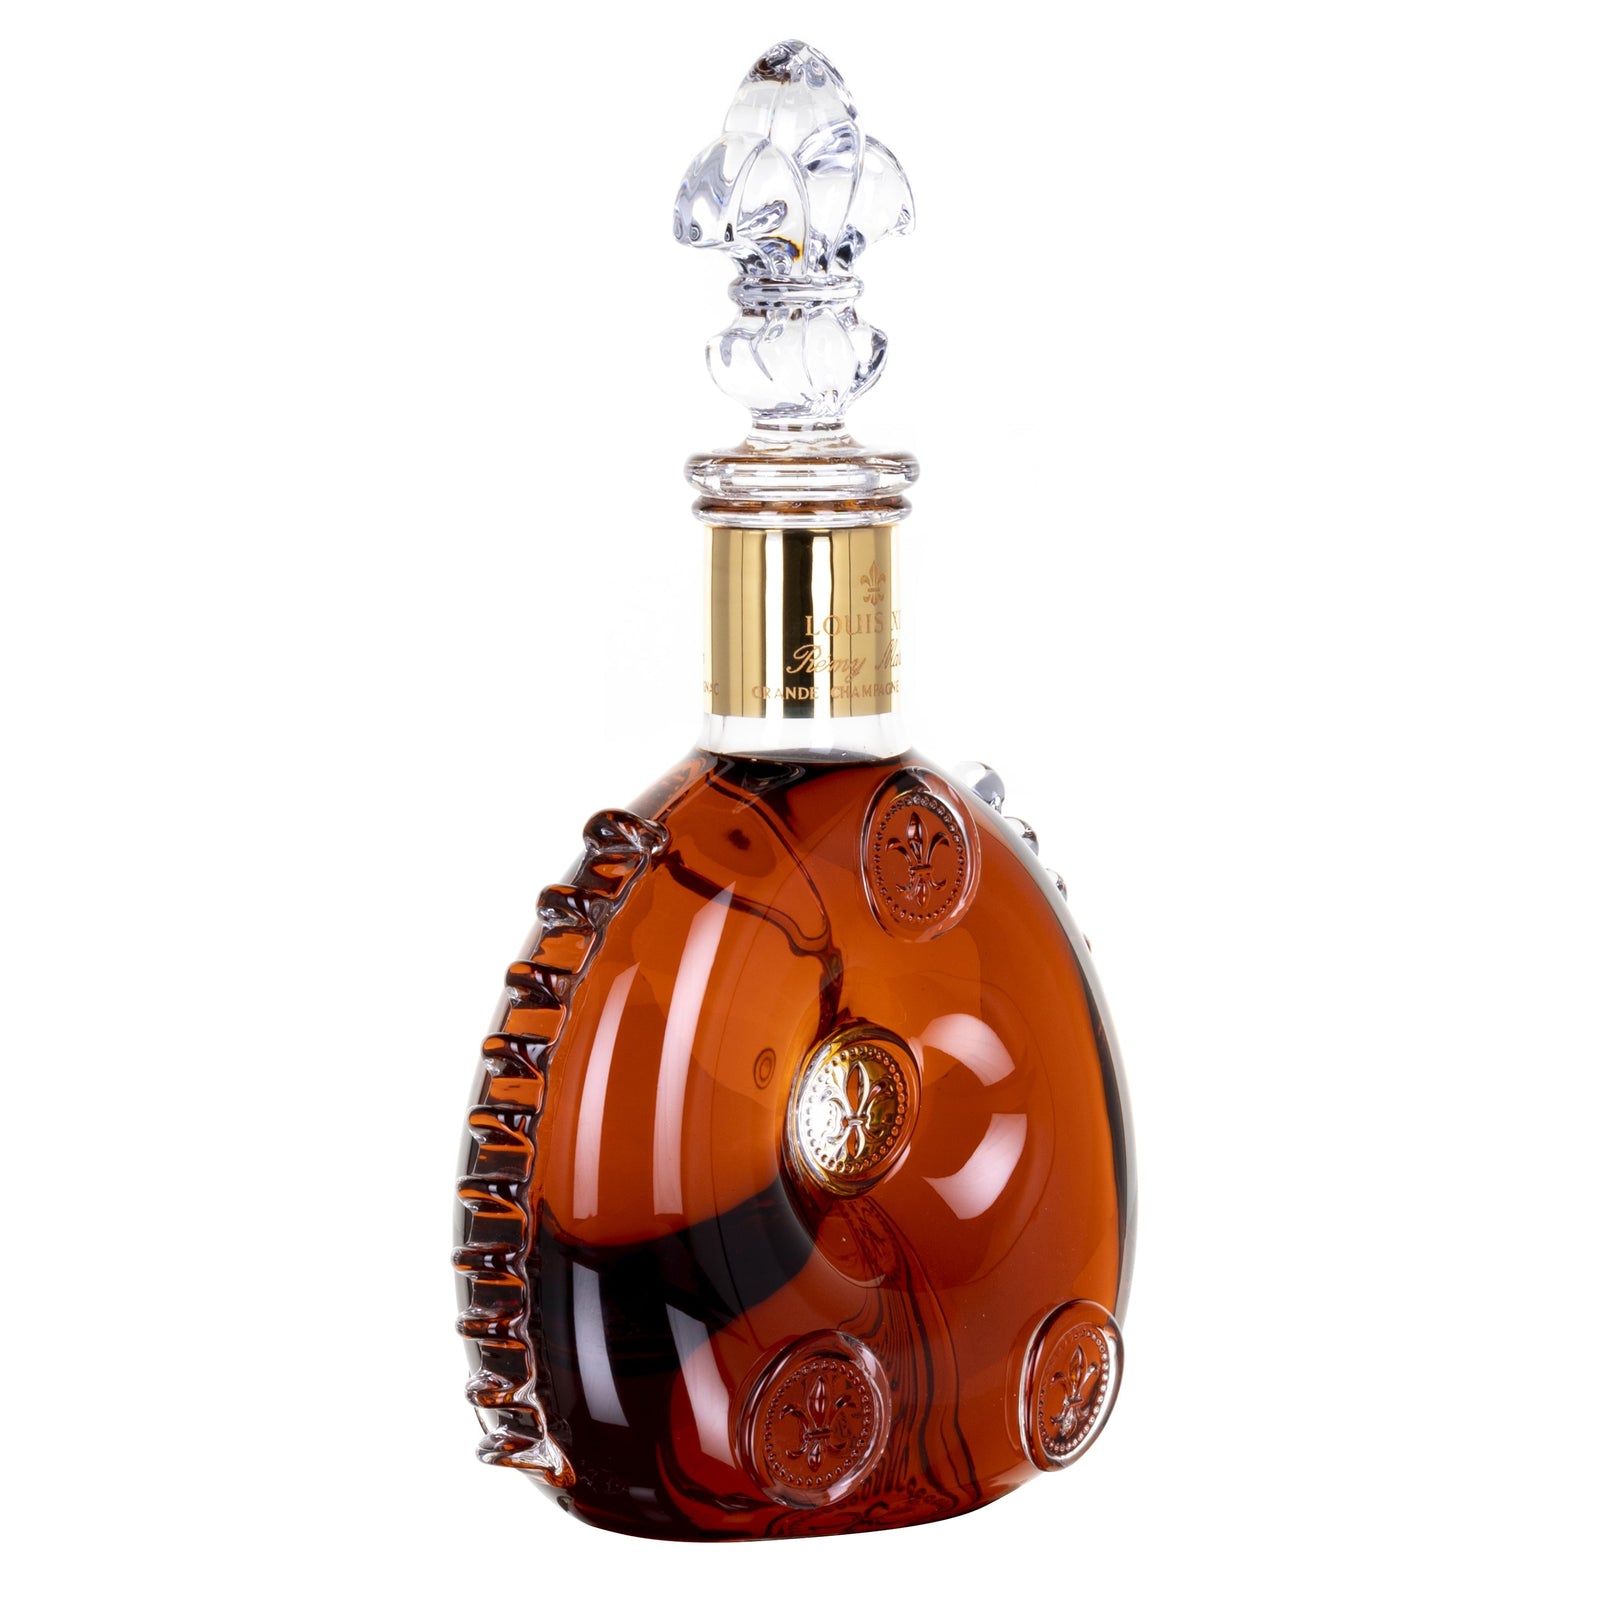 Louis the 13th Cognac Price: Exploring Cognac's Royal Elegance